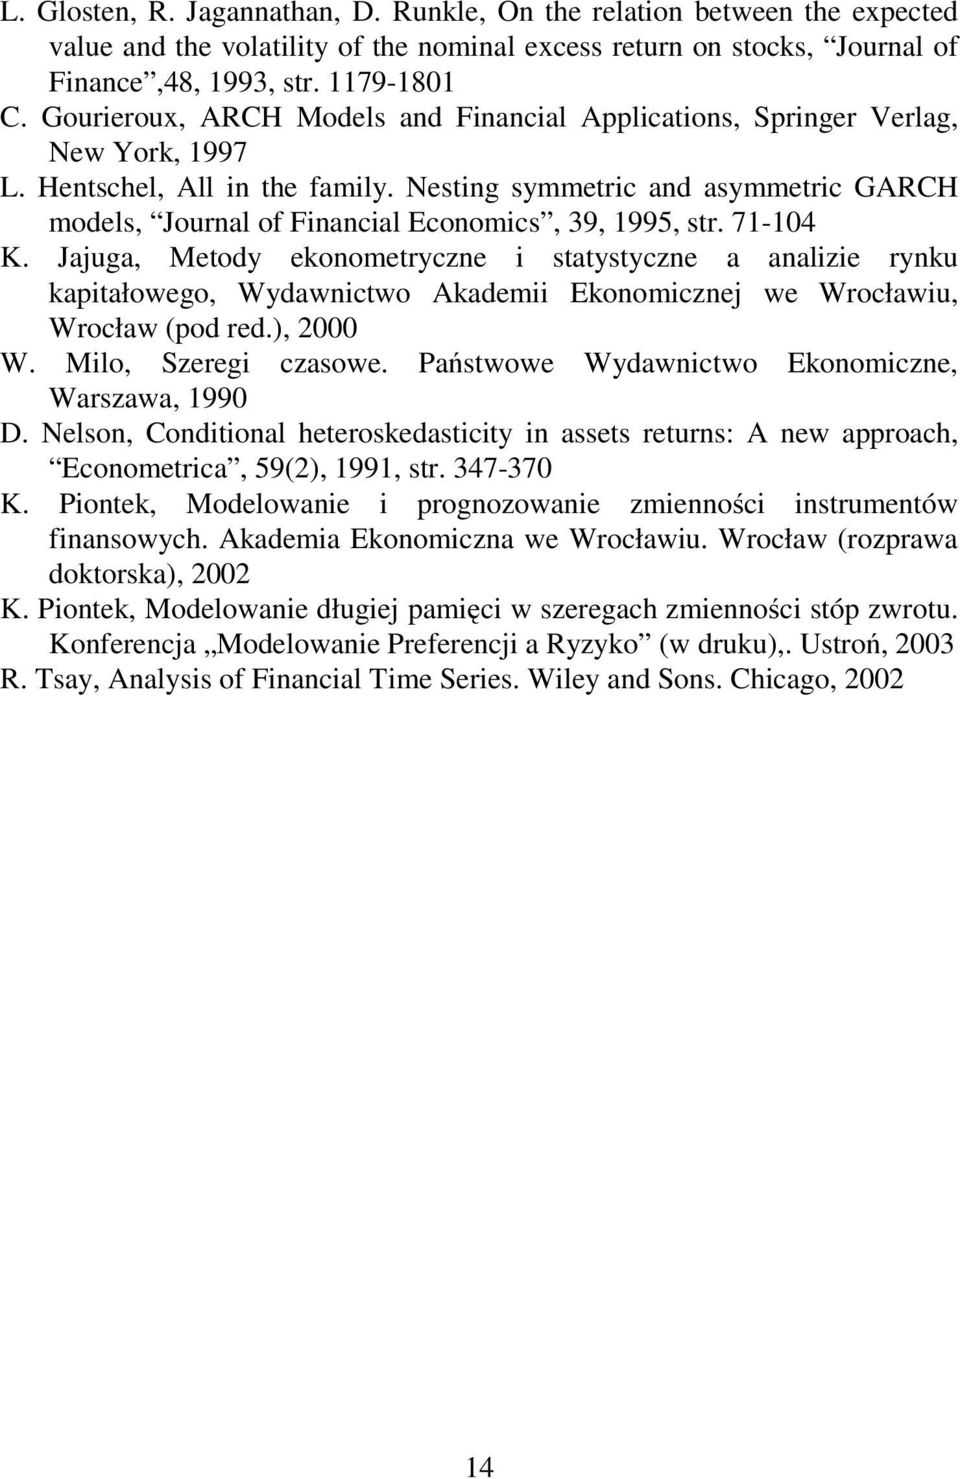 Nesing symmeric and asymmeric GARCH models, Journal of Financial Economics, 39, 1995, sr. 71-104 K.